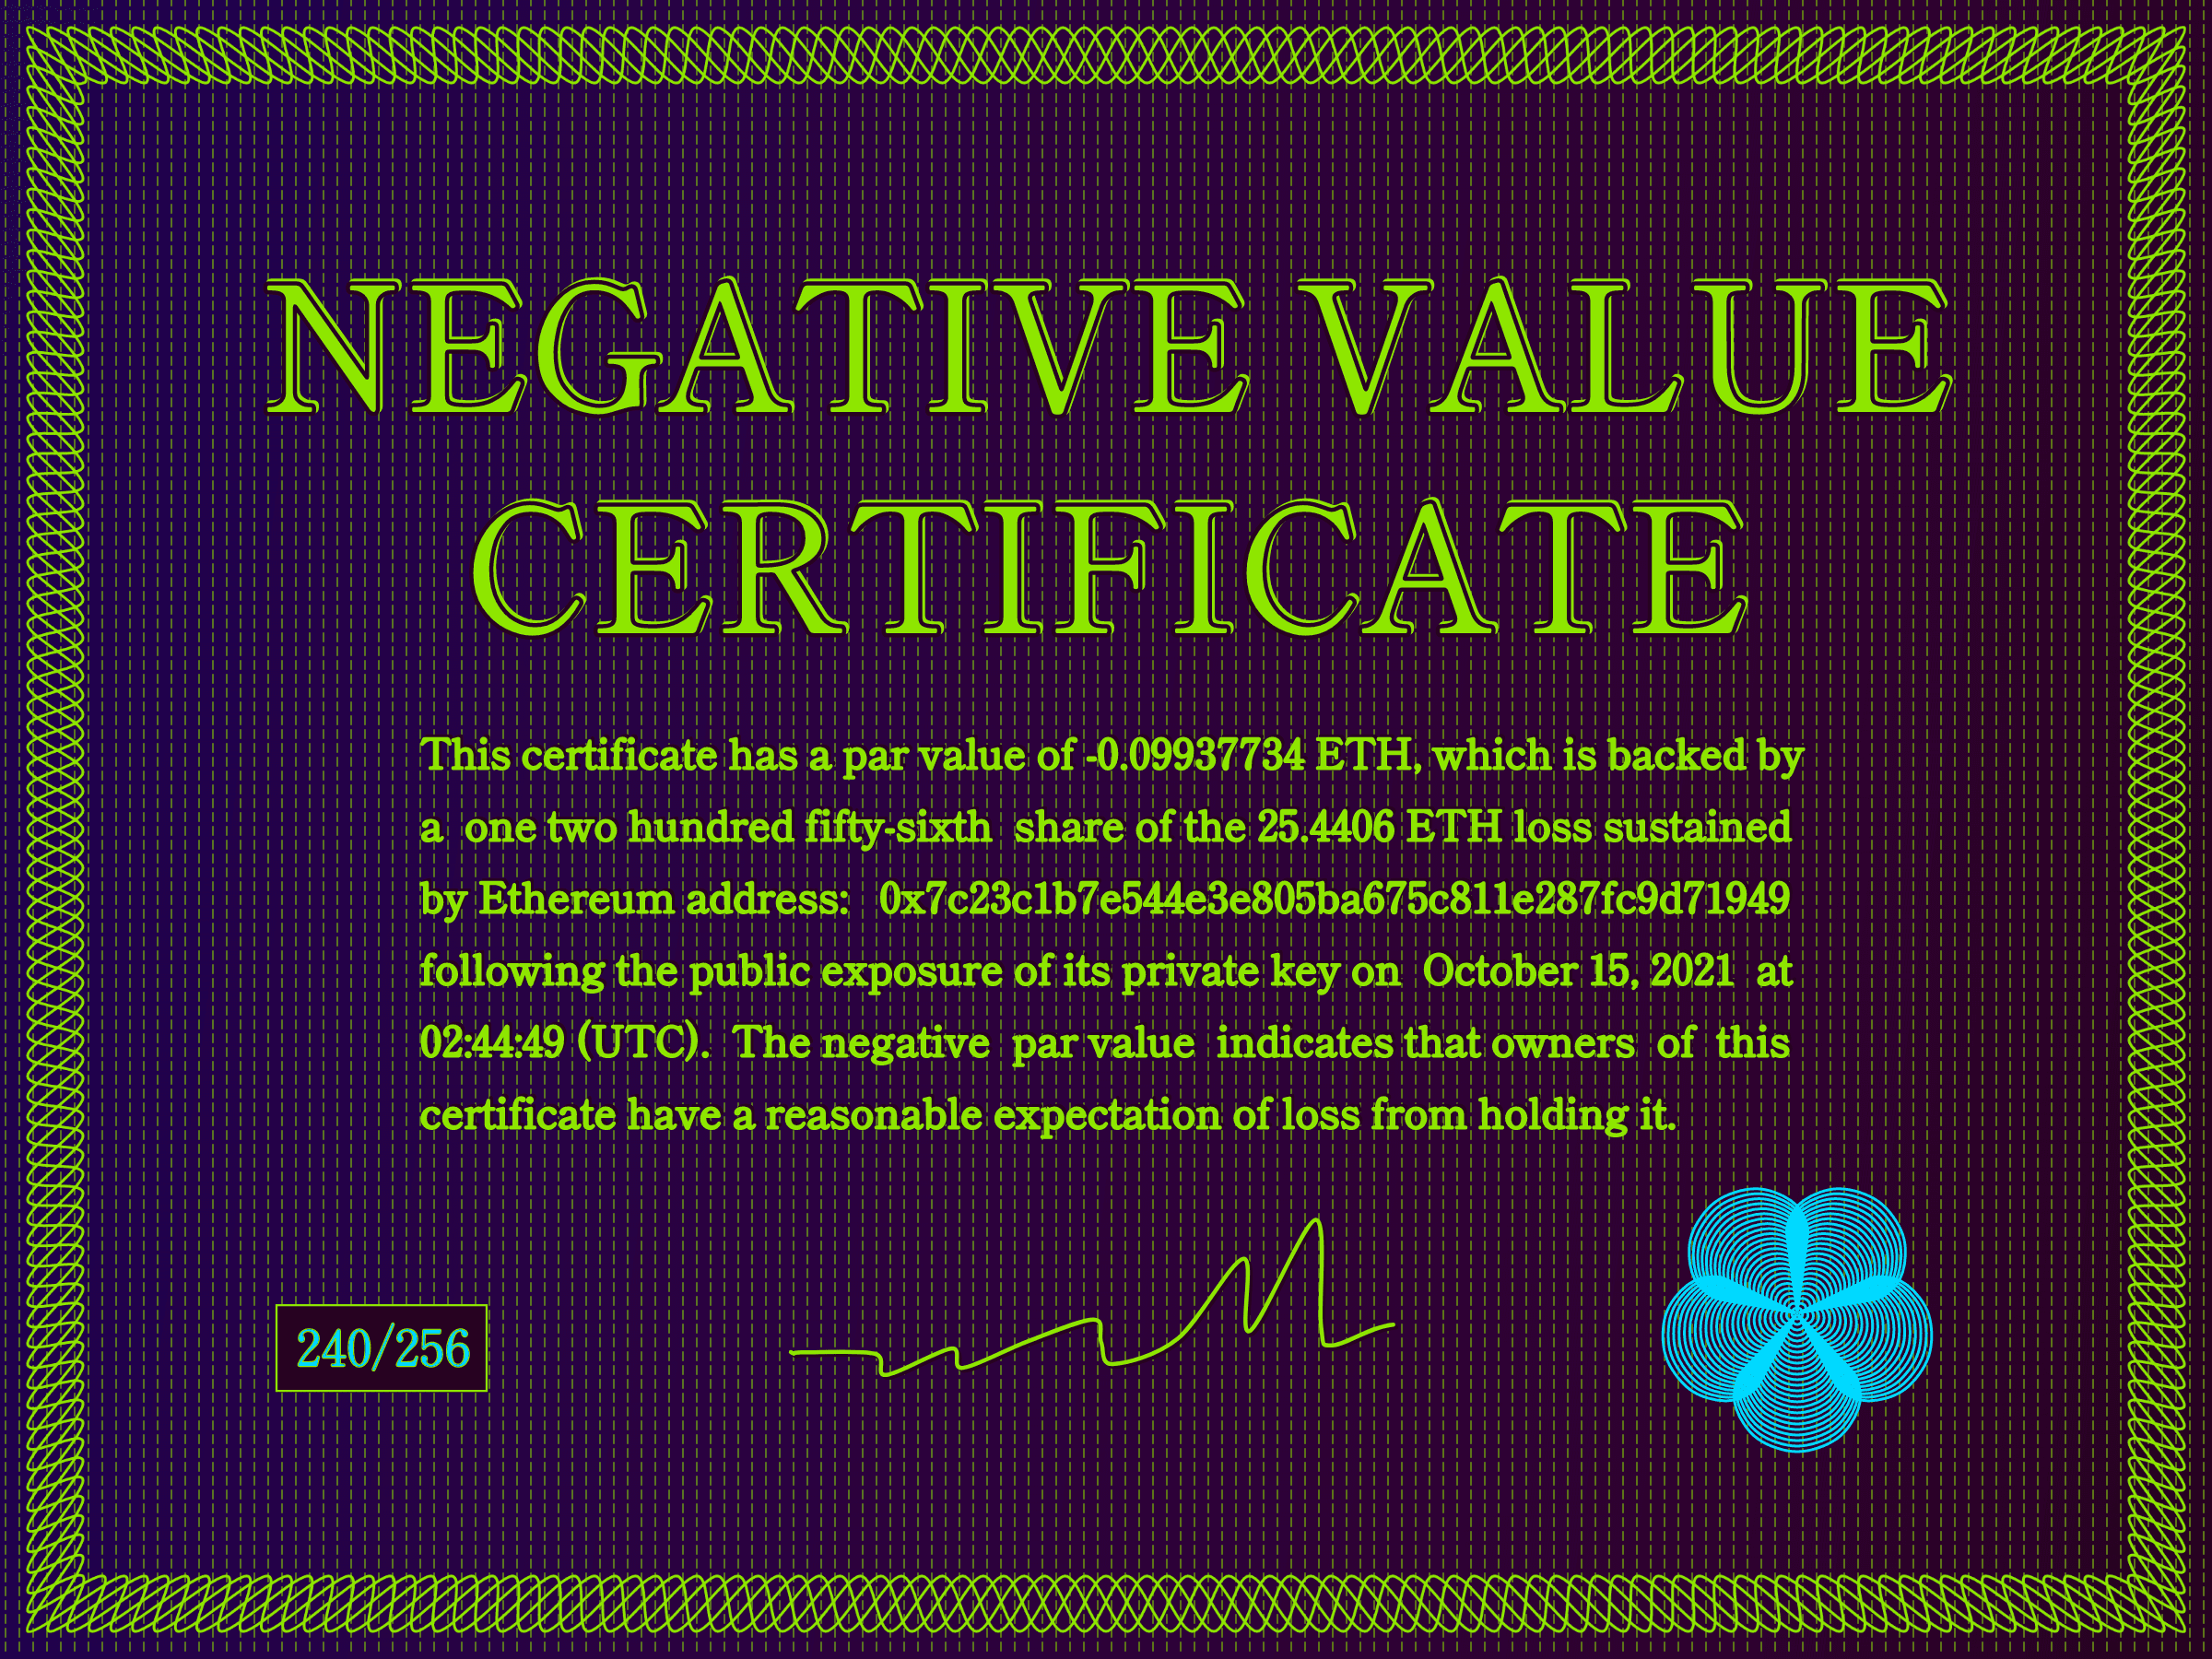 Negative Value Certificate #240 of 256